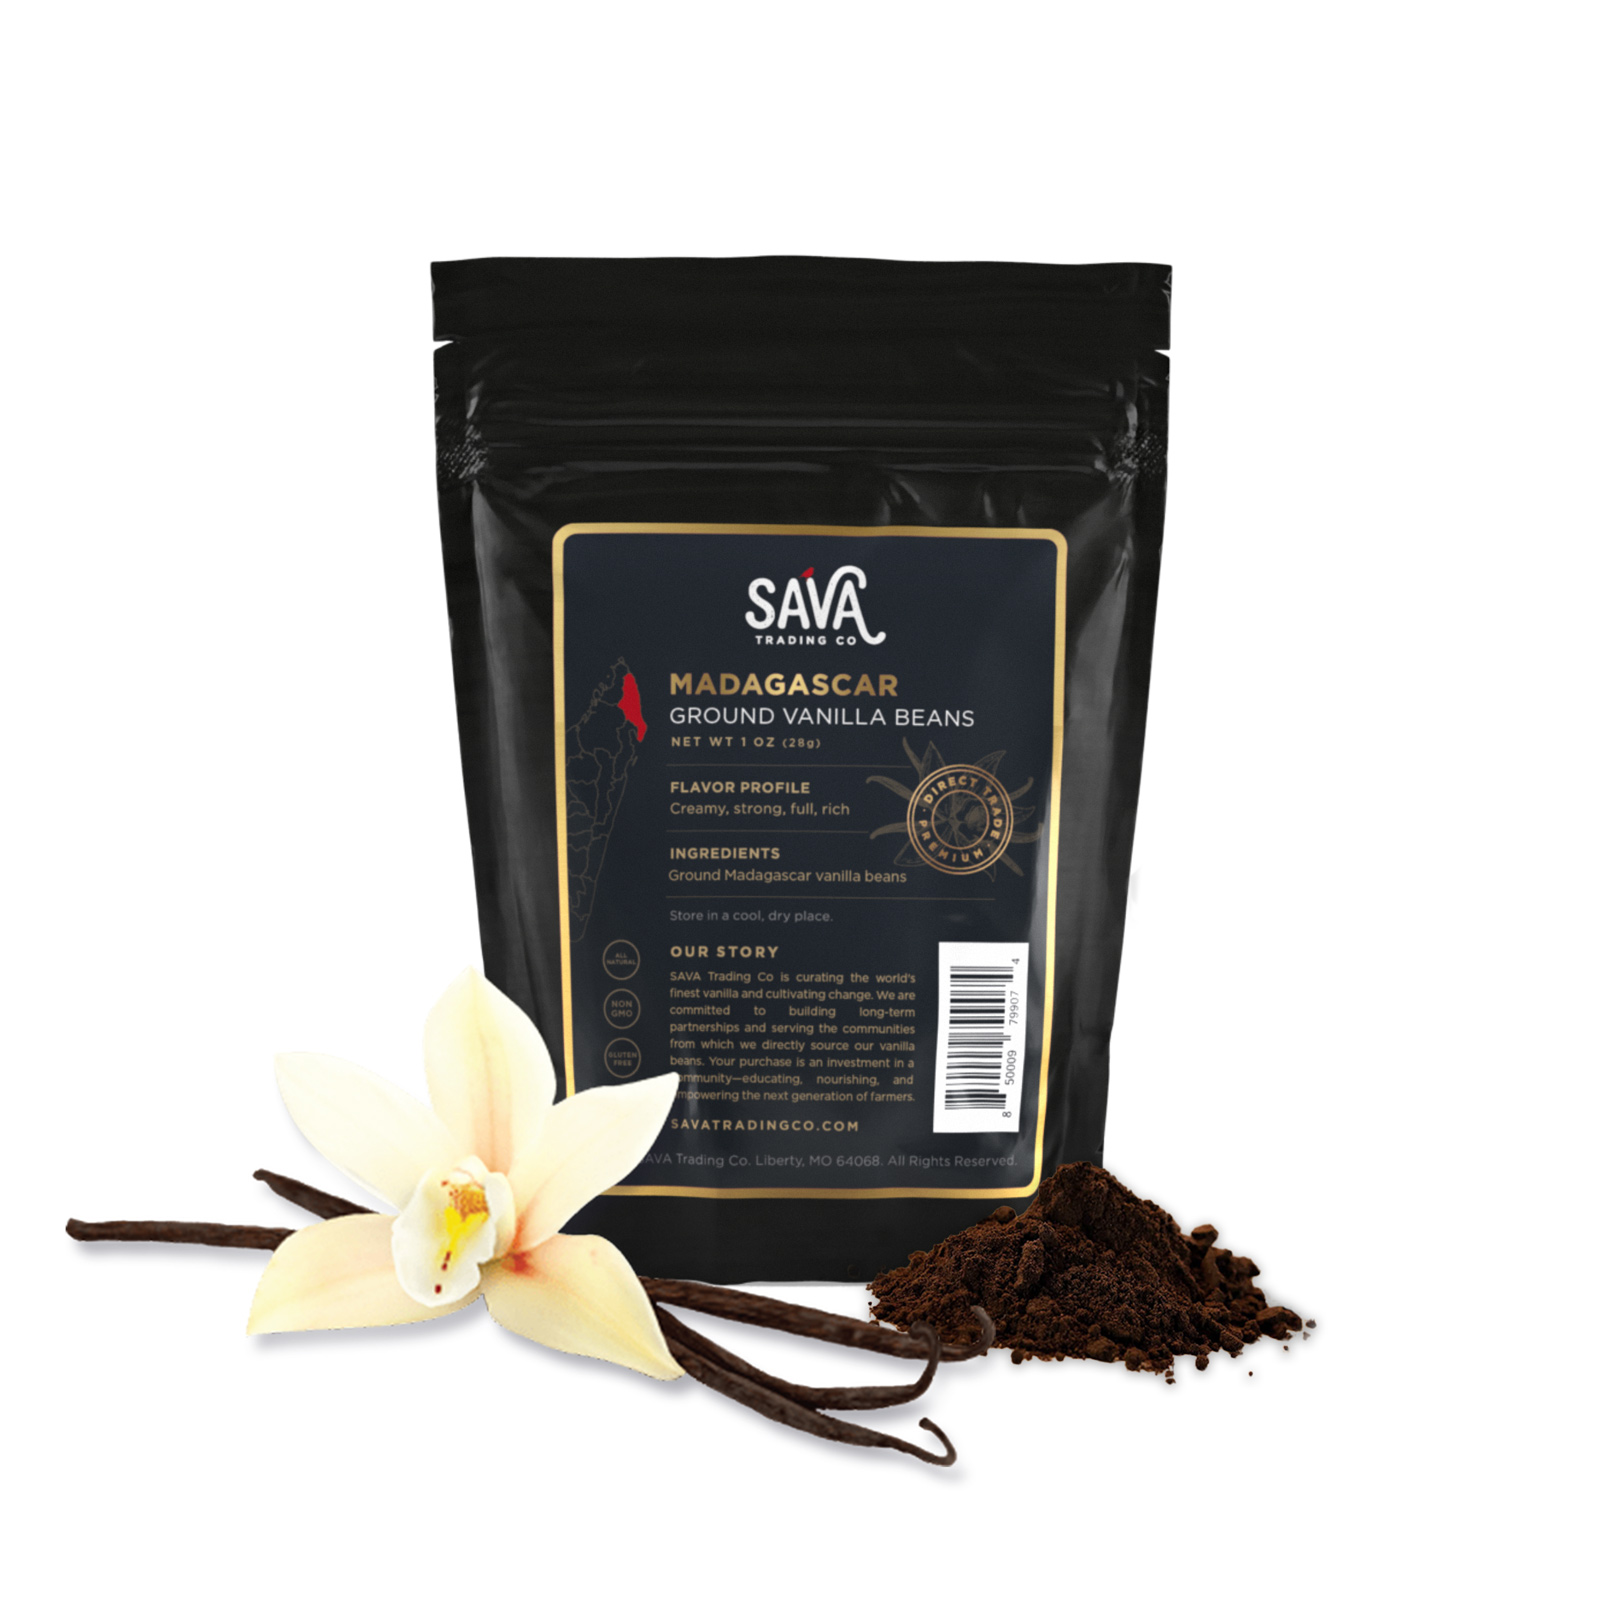 SAVA-Trading-Co-Madagascar-Ground-Vanilla-Bean-Powder-1oz